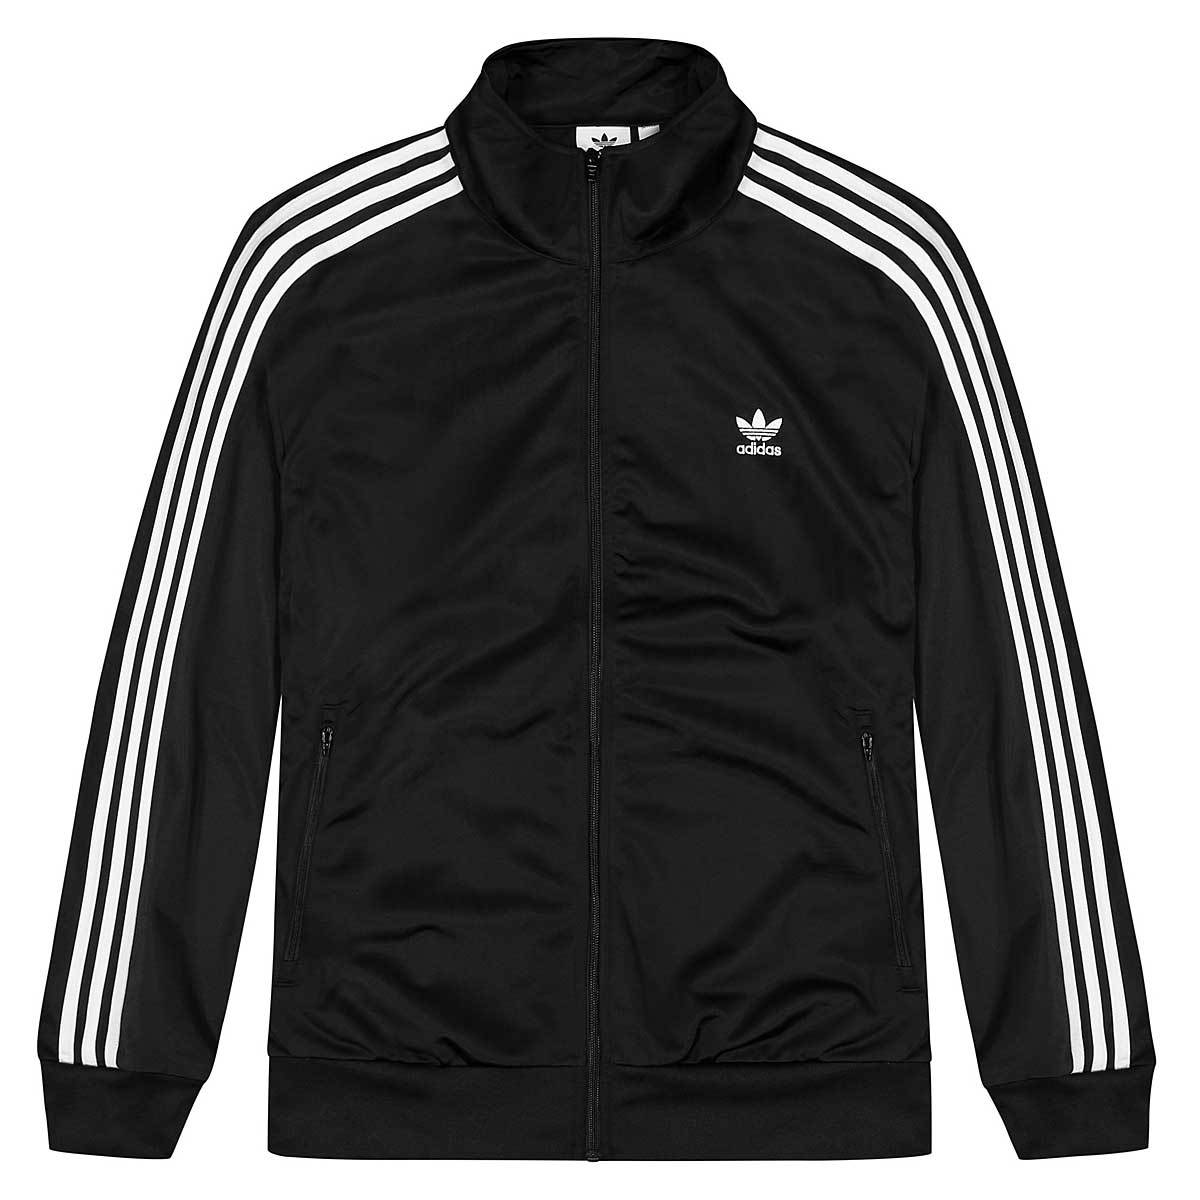 Adidas Originals Firebird Track Jacket, Black